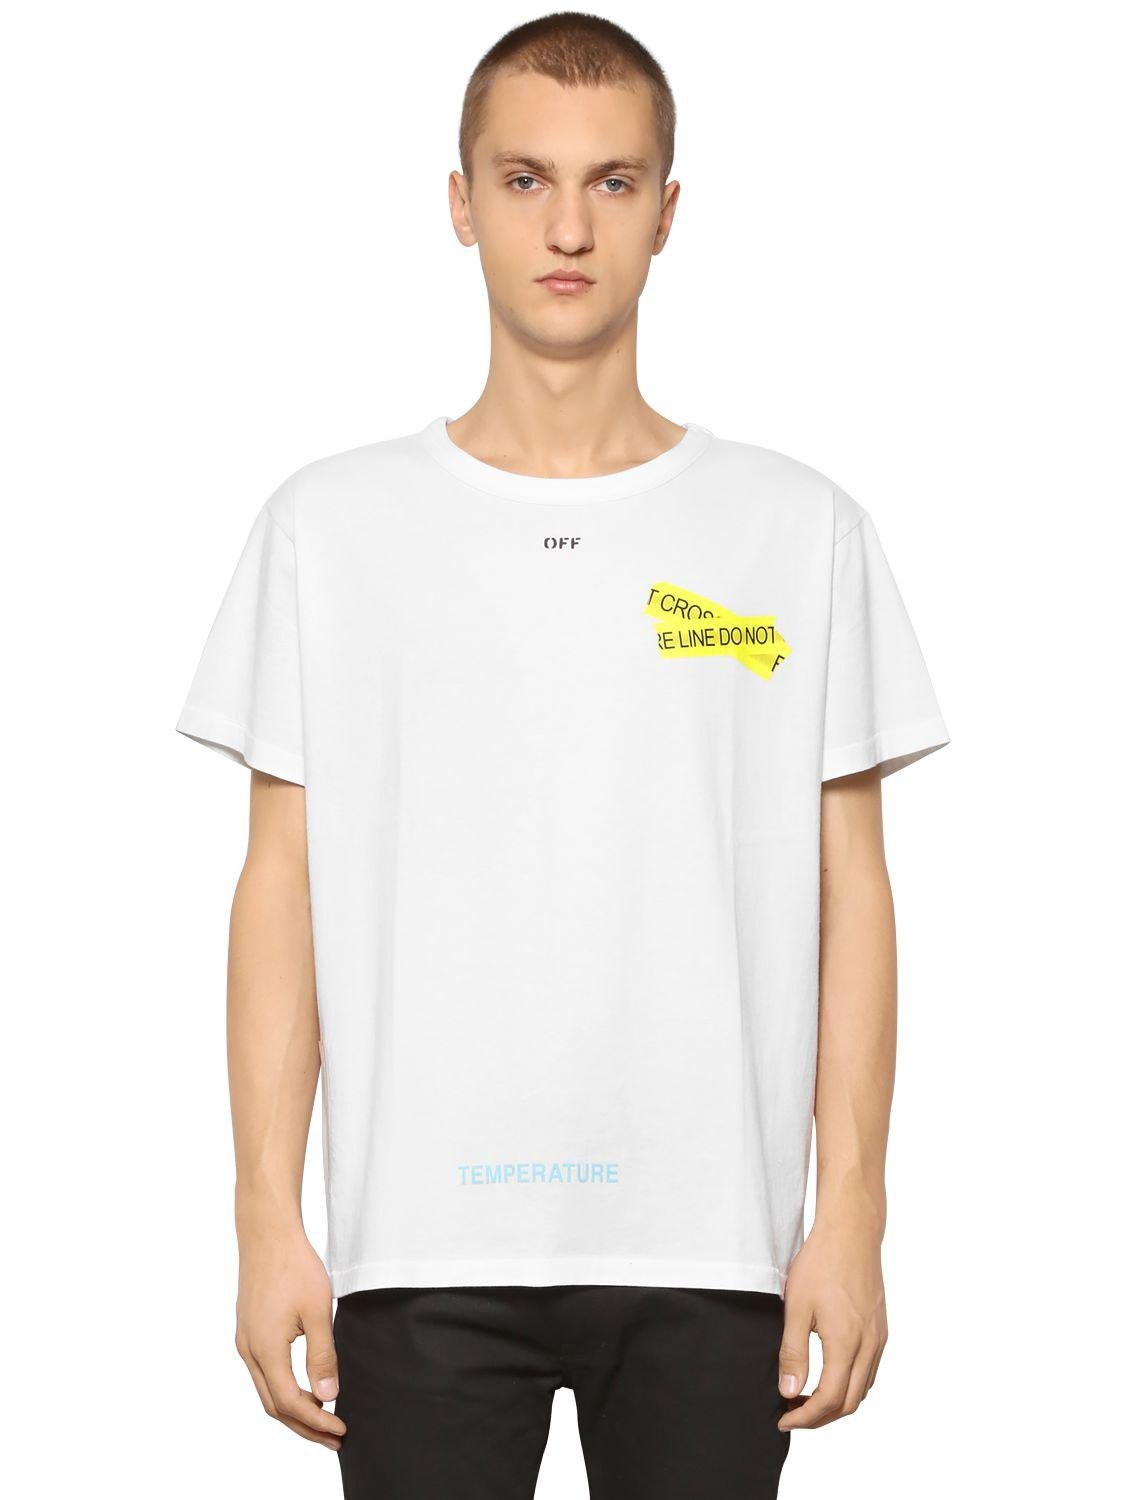 Off-White c/o Virgil Abloh Oversize Fire Line Tape Jersey T-shirt in White  for Men | Lyst